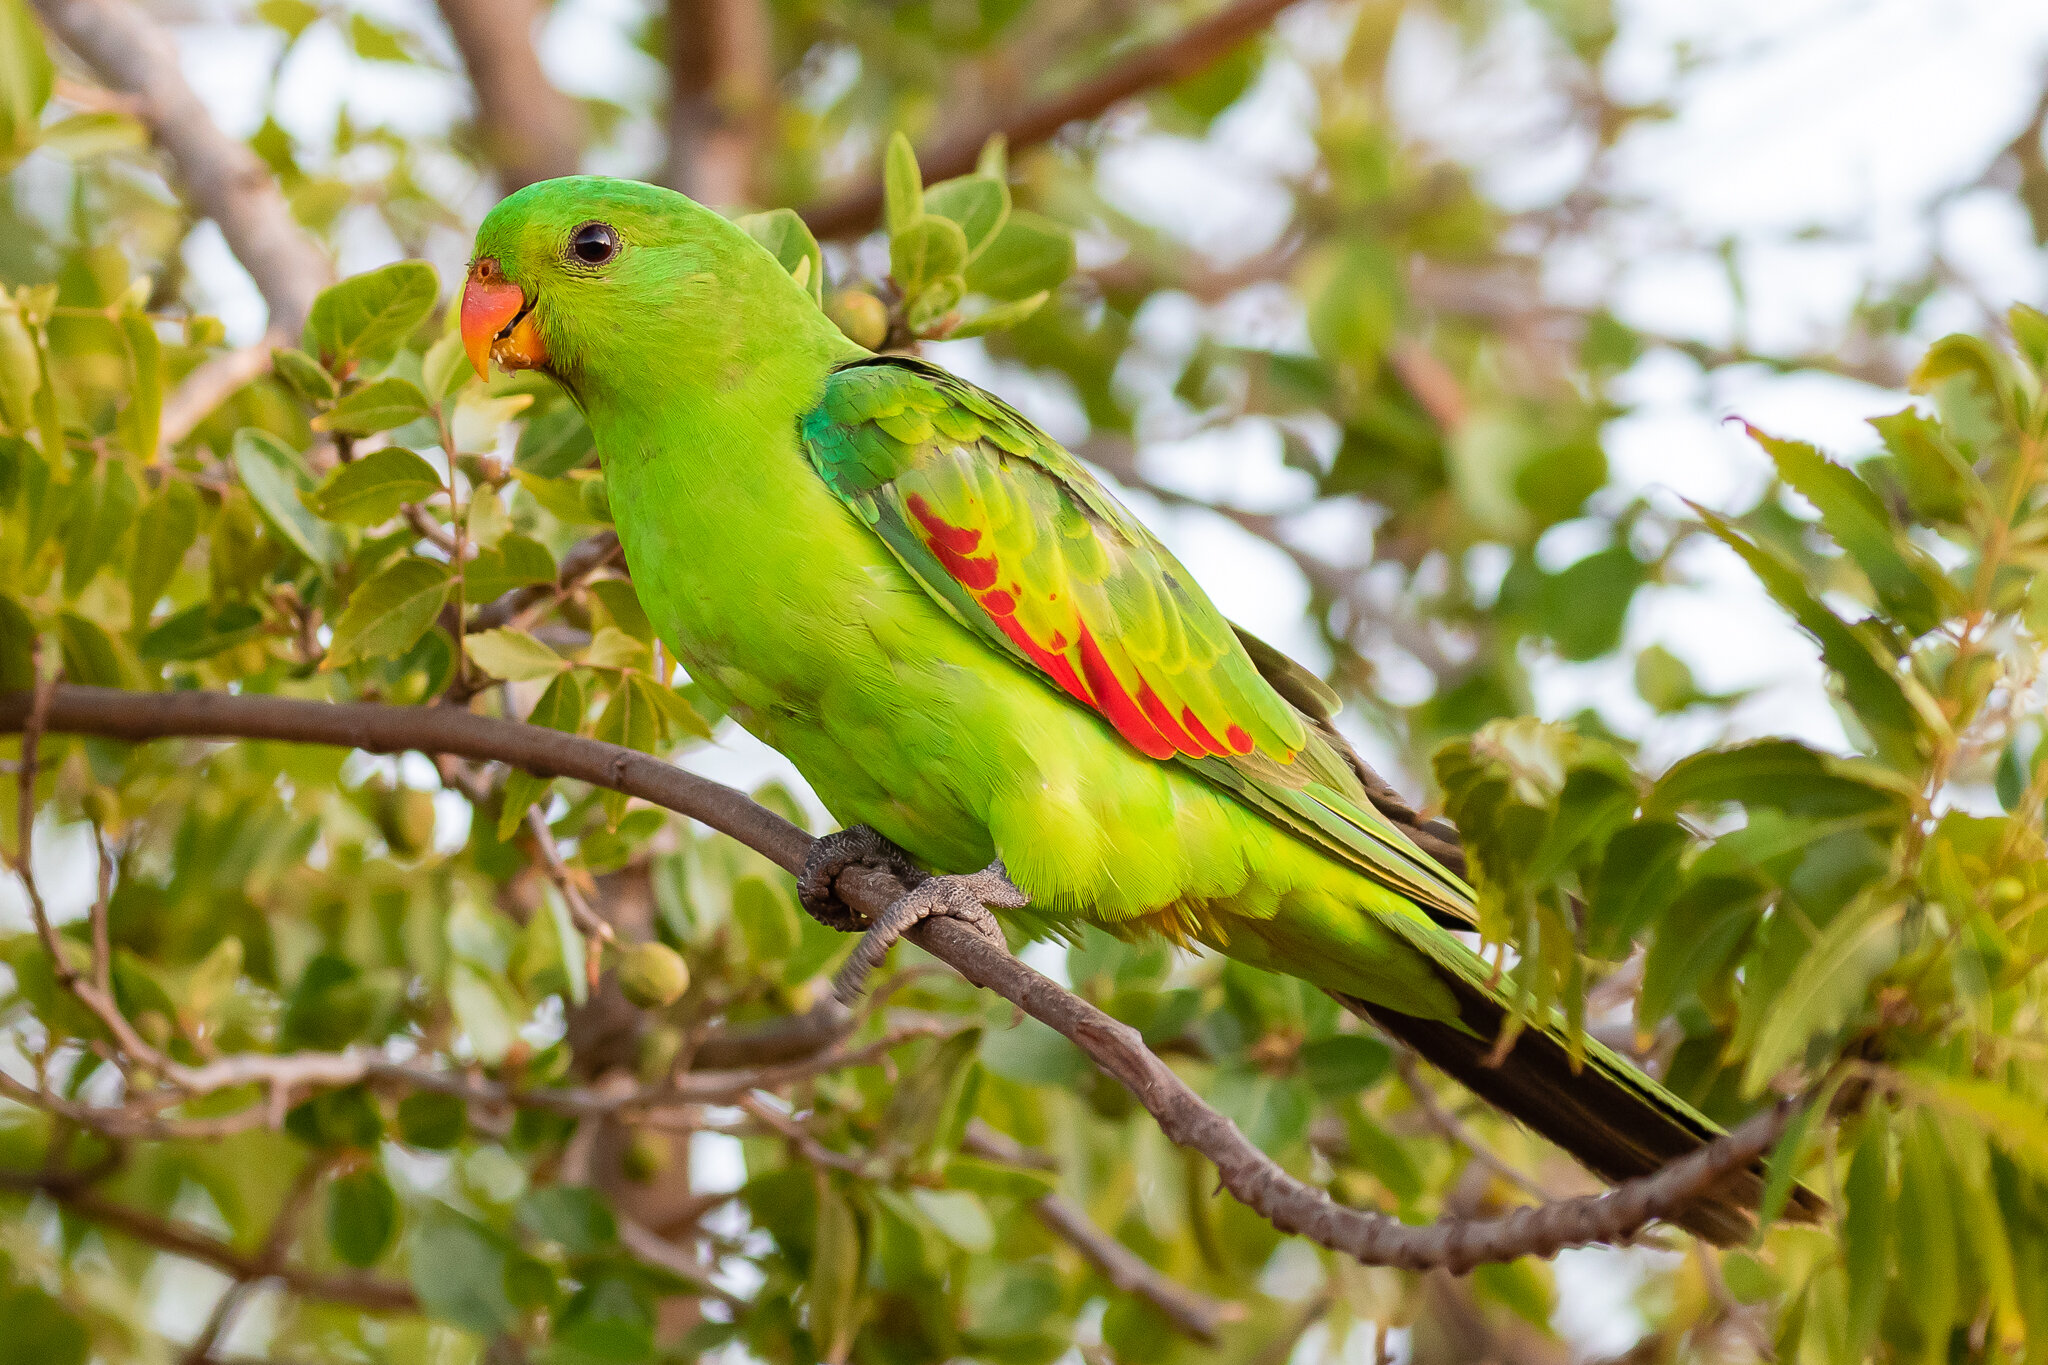 Broome Western Australia - Australia's Wonderful Birds